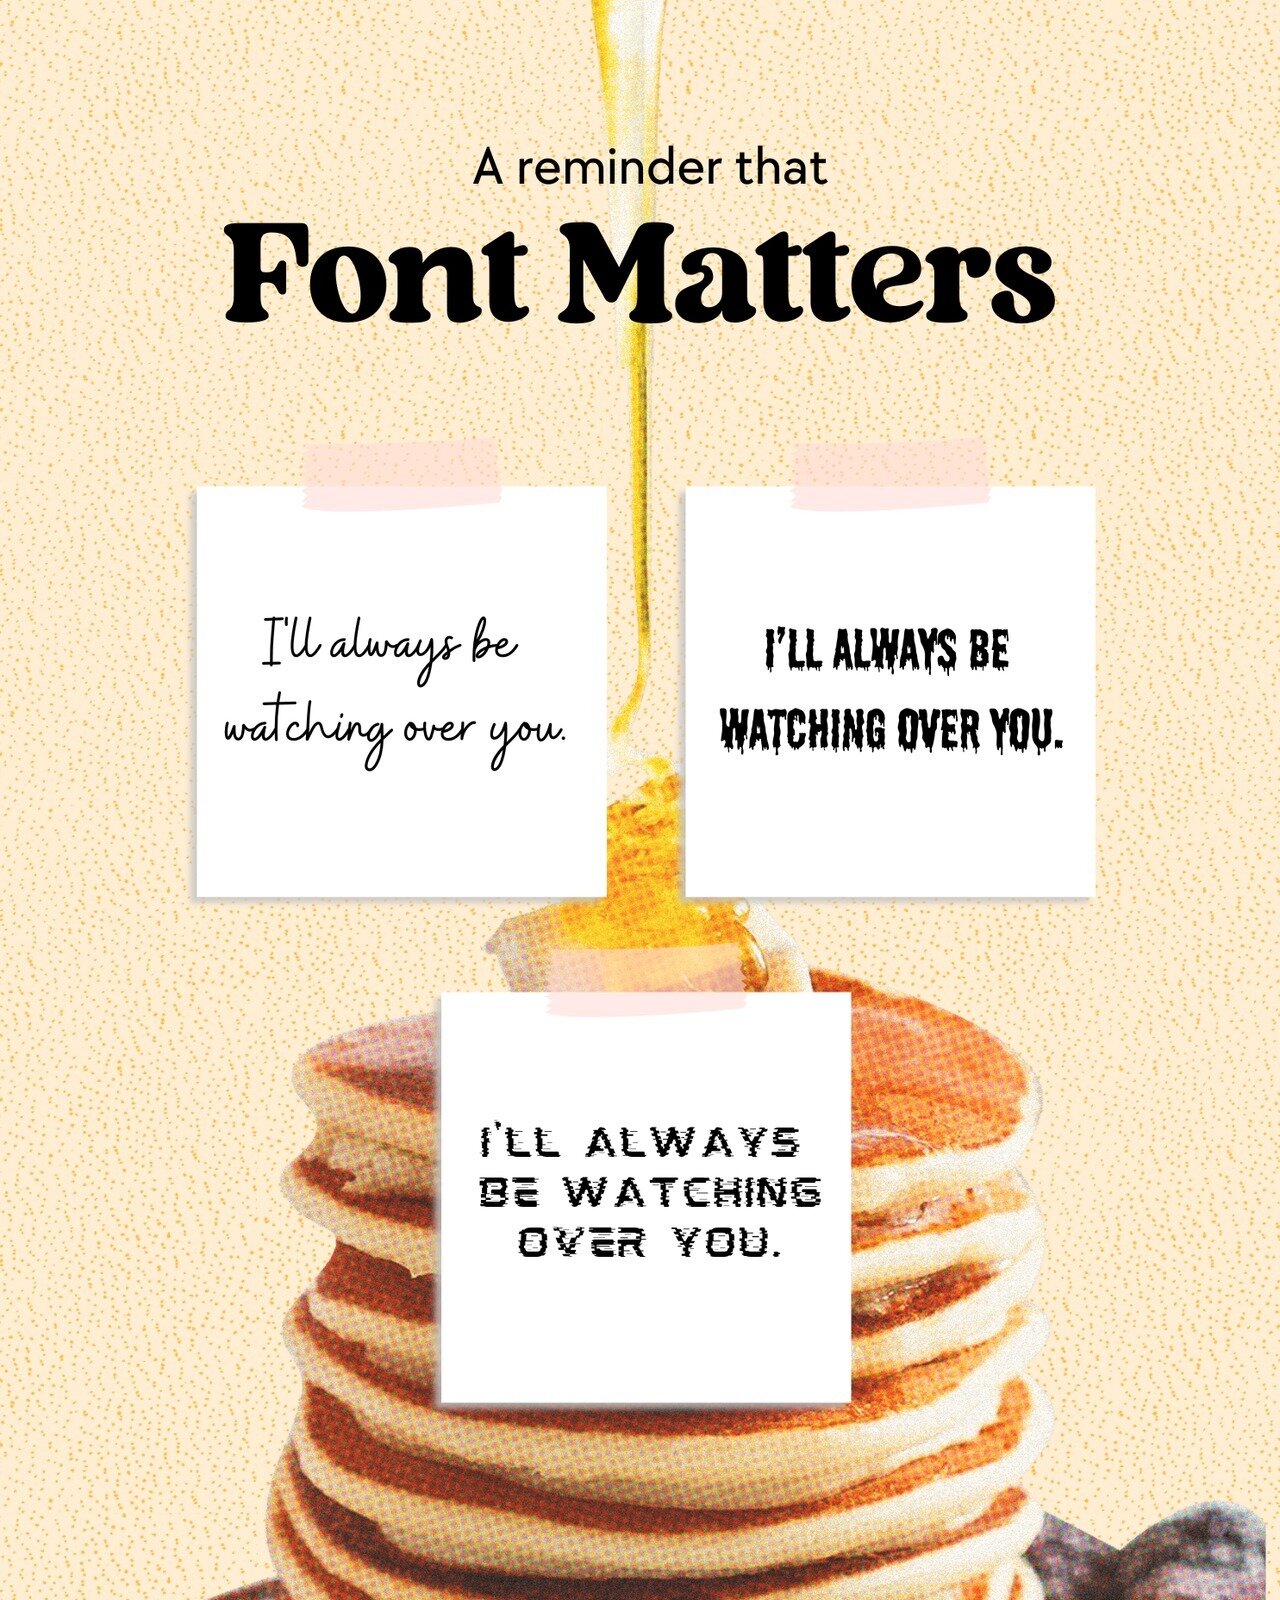 Fonts matter. A lot.